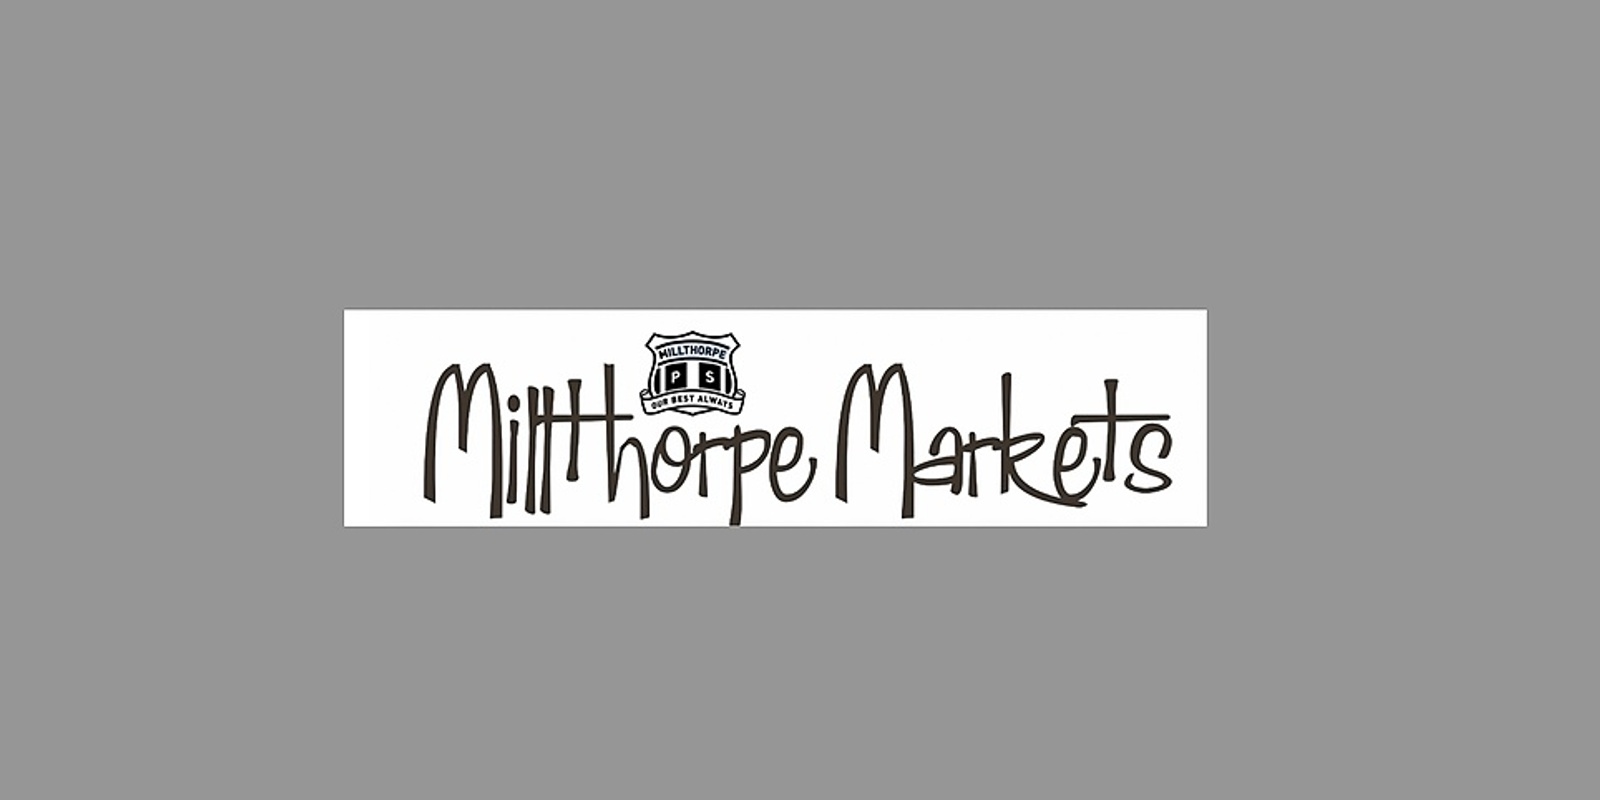 Millthorpe Markets APRIL